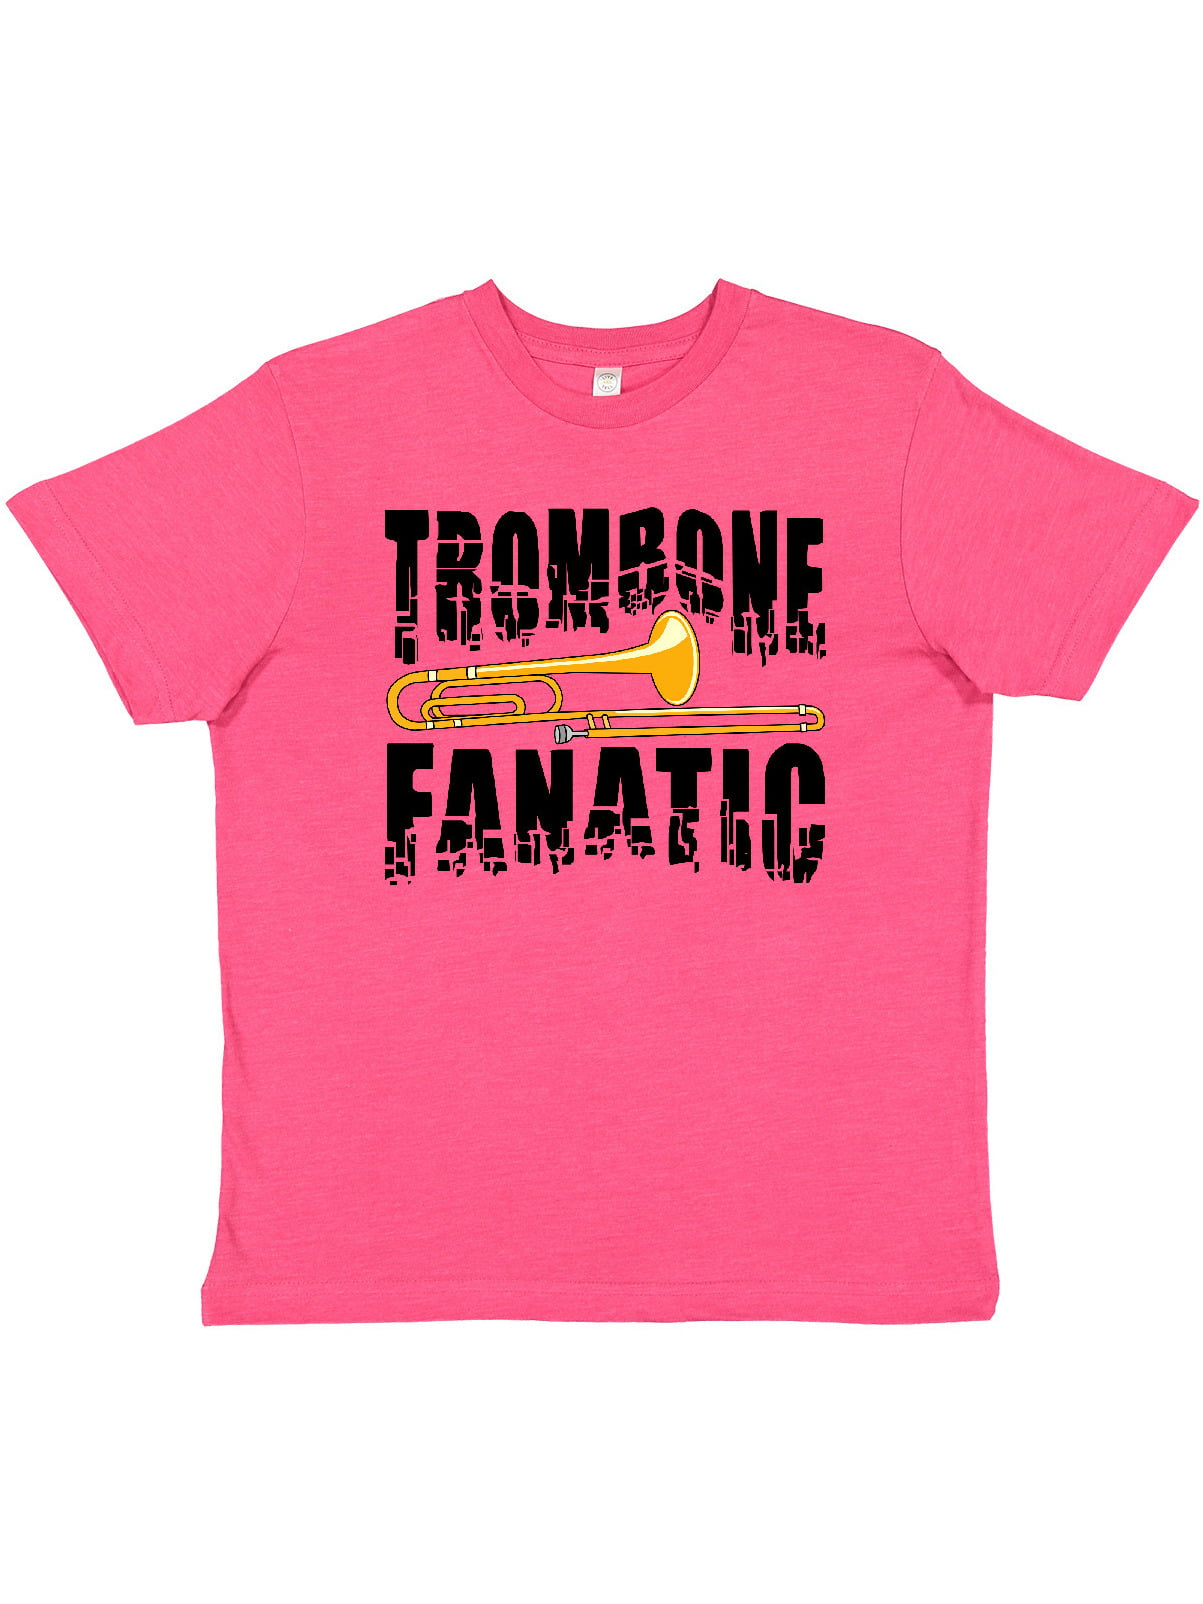 Just Here For Trombone Silhouette Kids Tee Shirt Boys Girls Unisex 2T-XL 